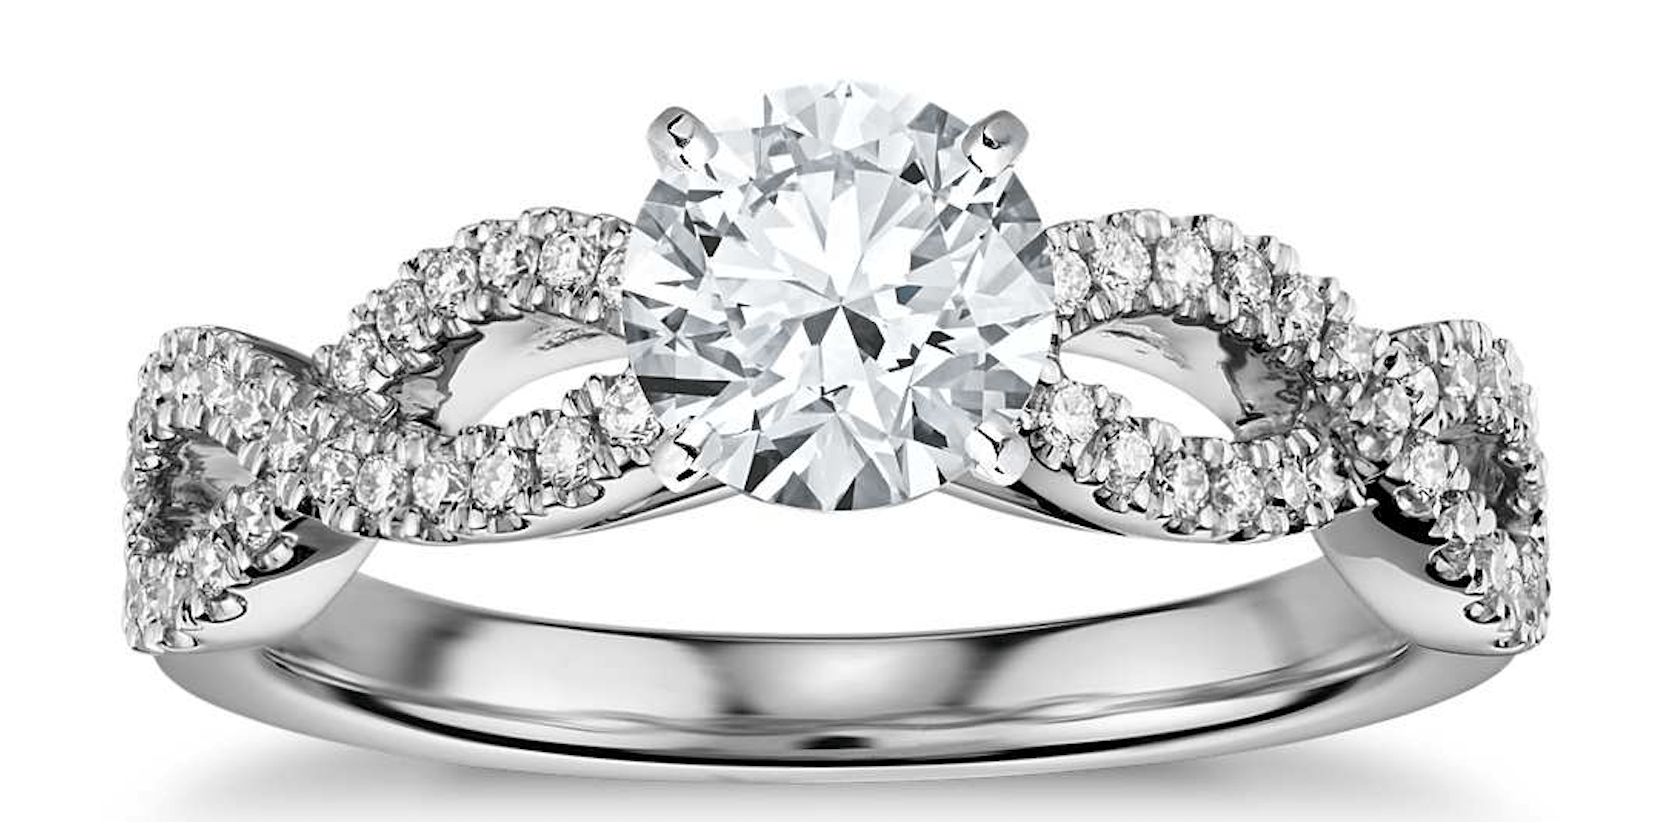 Intertwined wedding band and wedding ring, all diamond